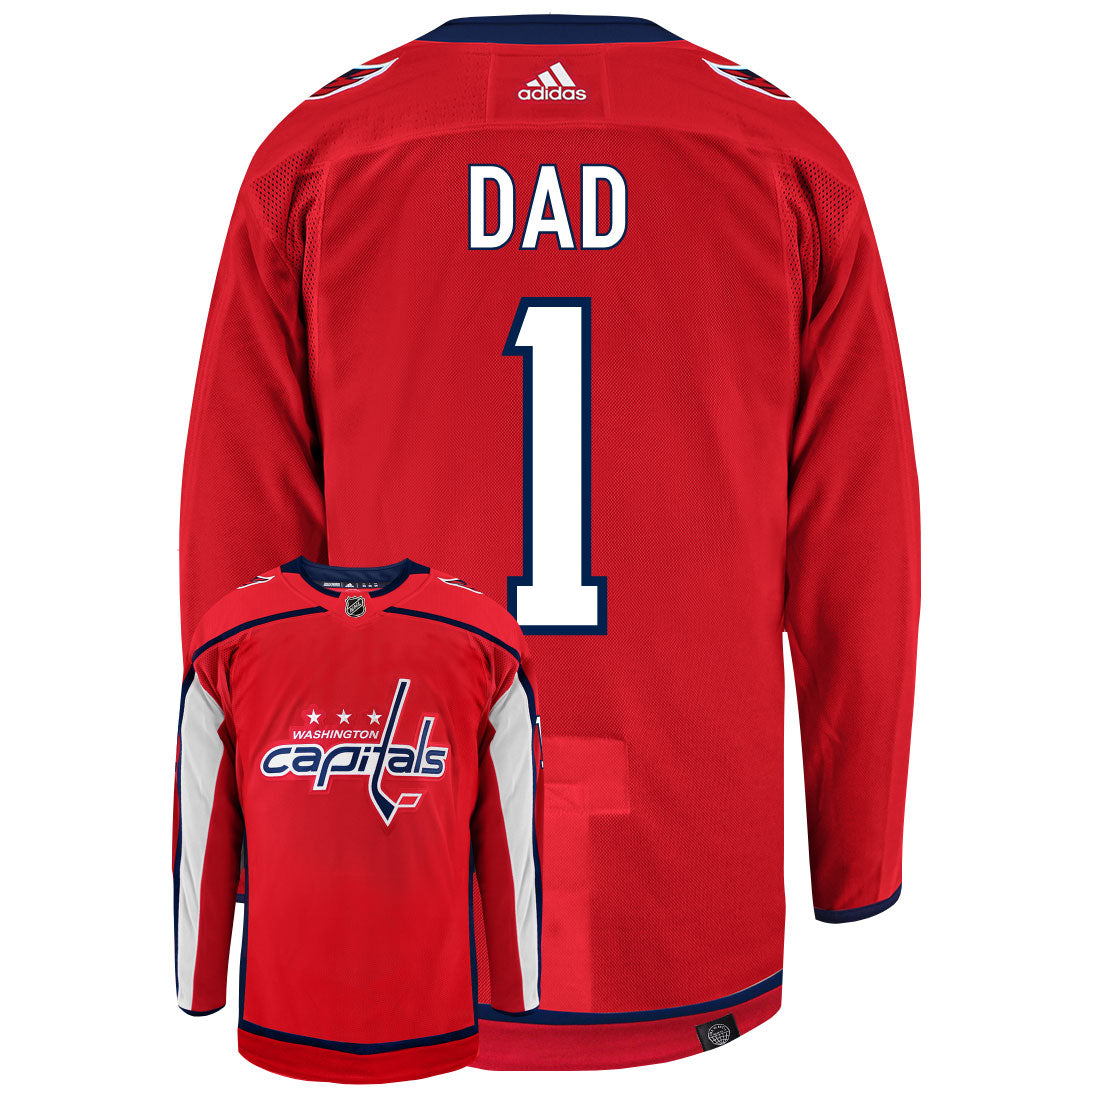 Washington Capitals Dad Number One Adidas Primegreen Authentic NHL Hockey Jersey